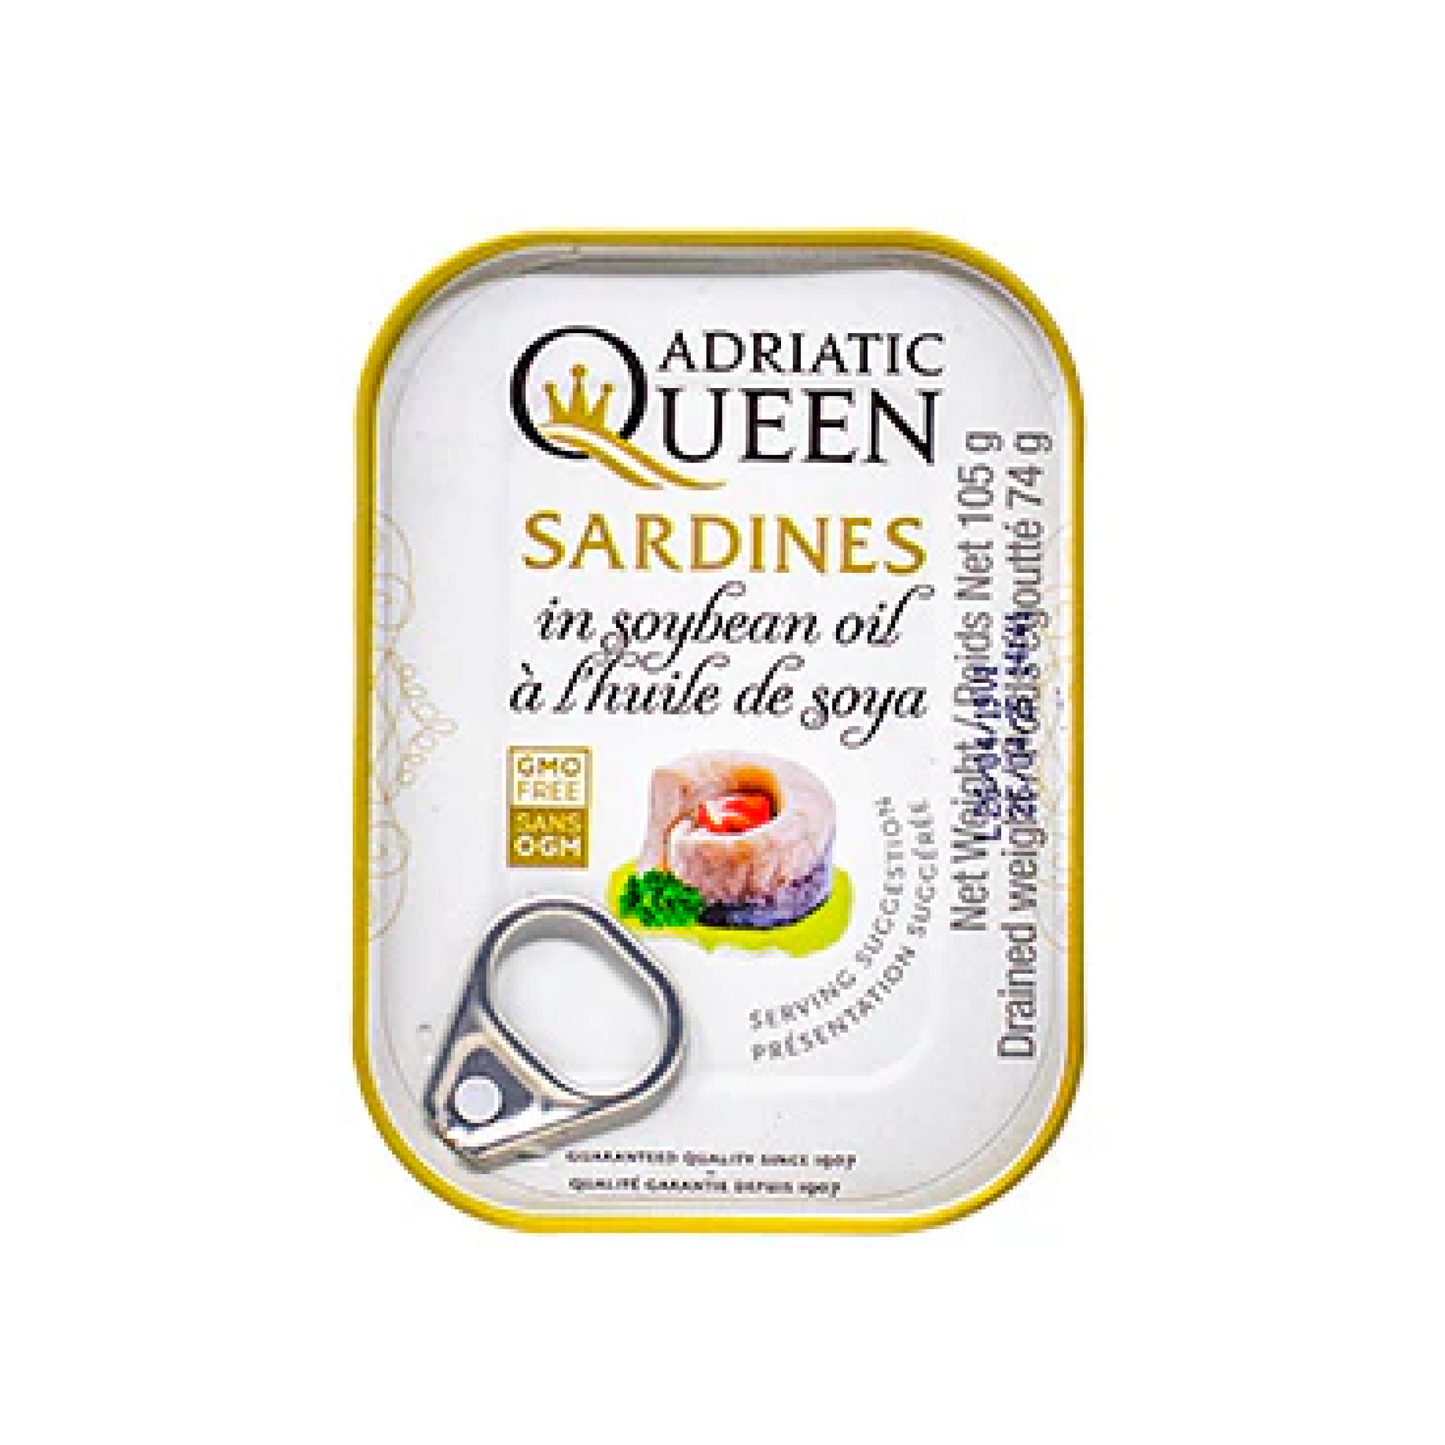 Adriatic Queen Sardines in Soybean Oil 105g